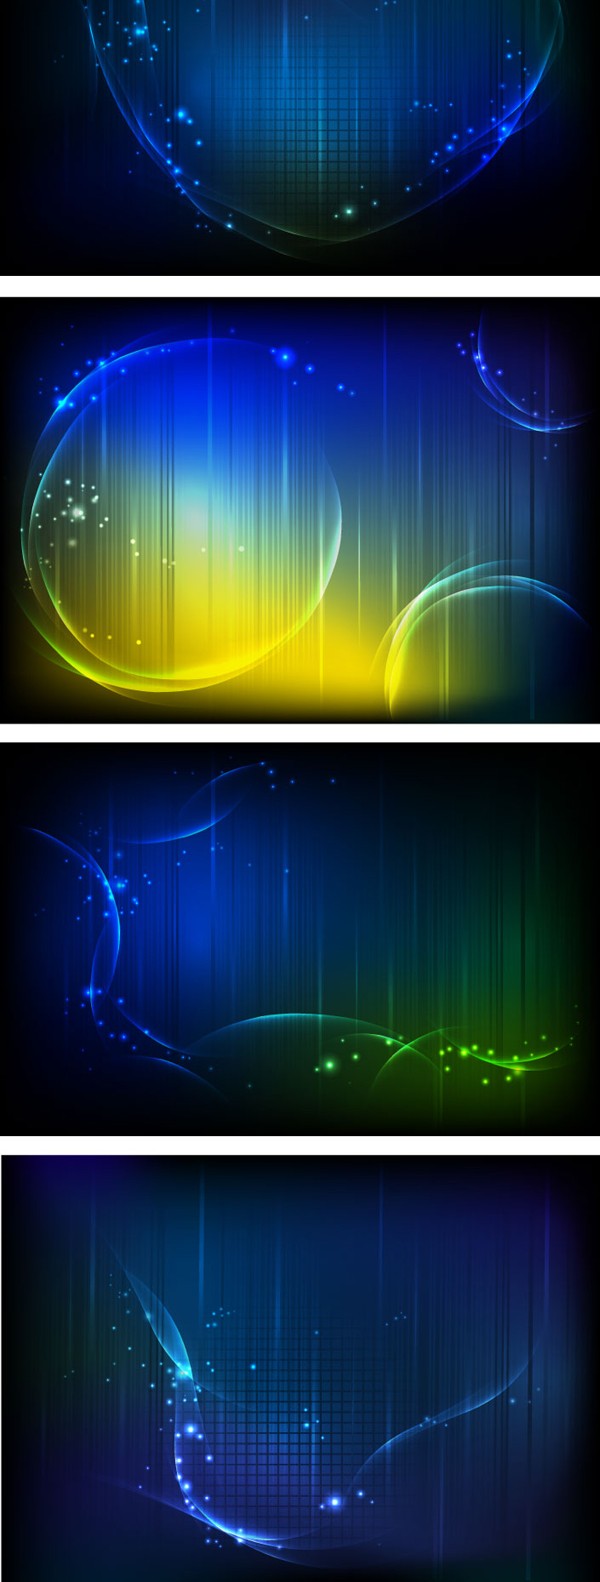 Dream blue light backgrounds vector